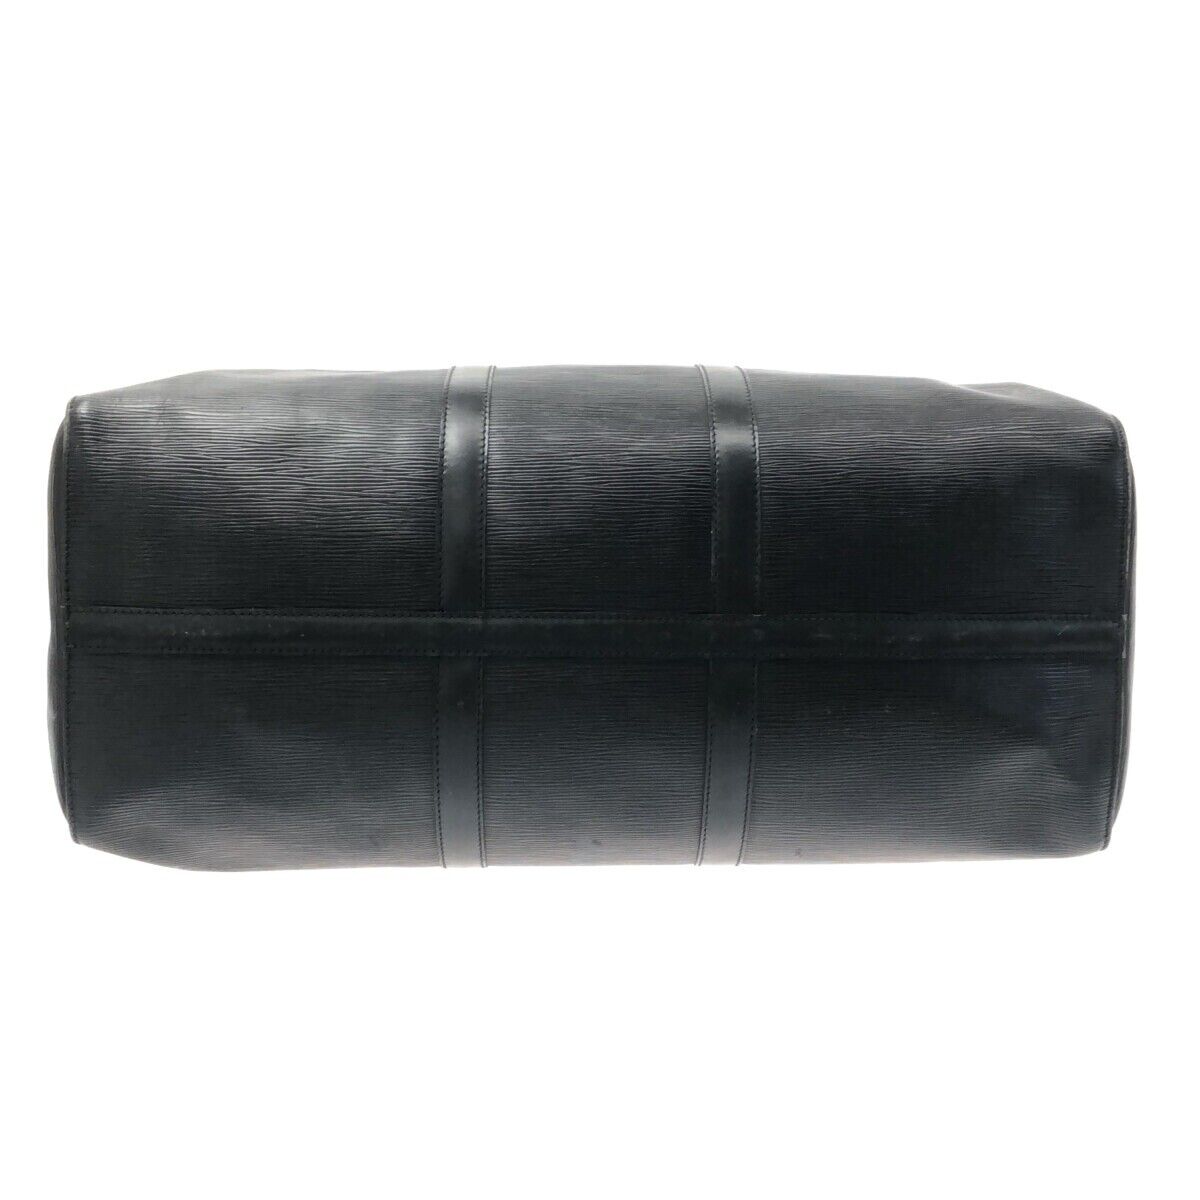 Black Epi Leather Passport Wallet | savyshop